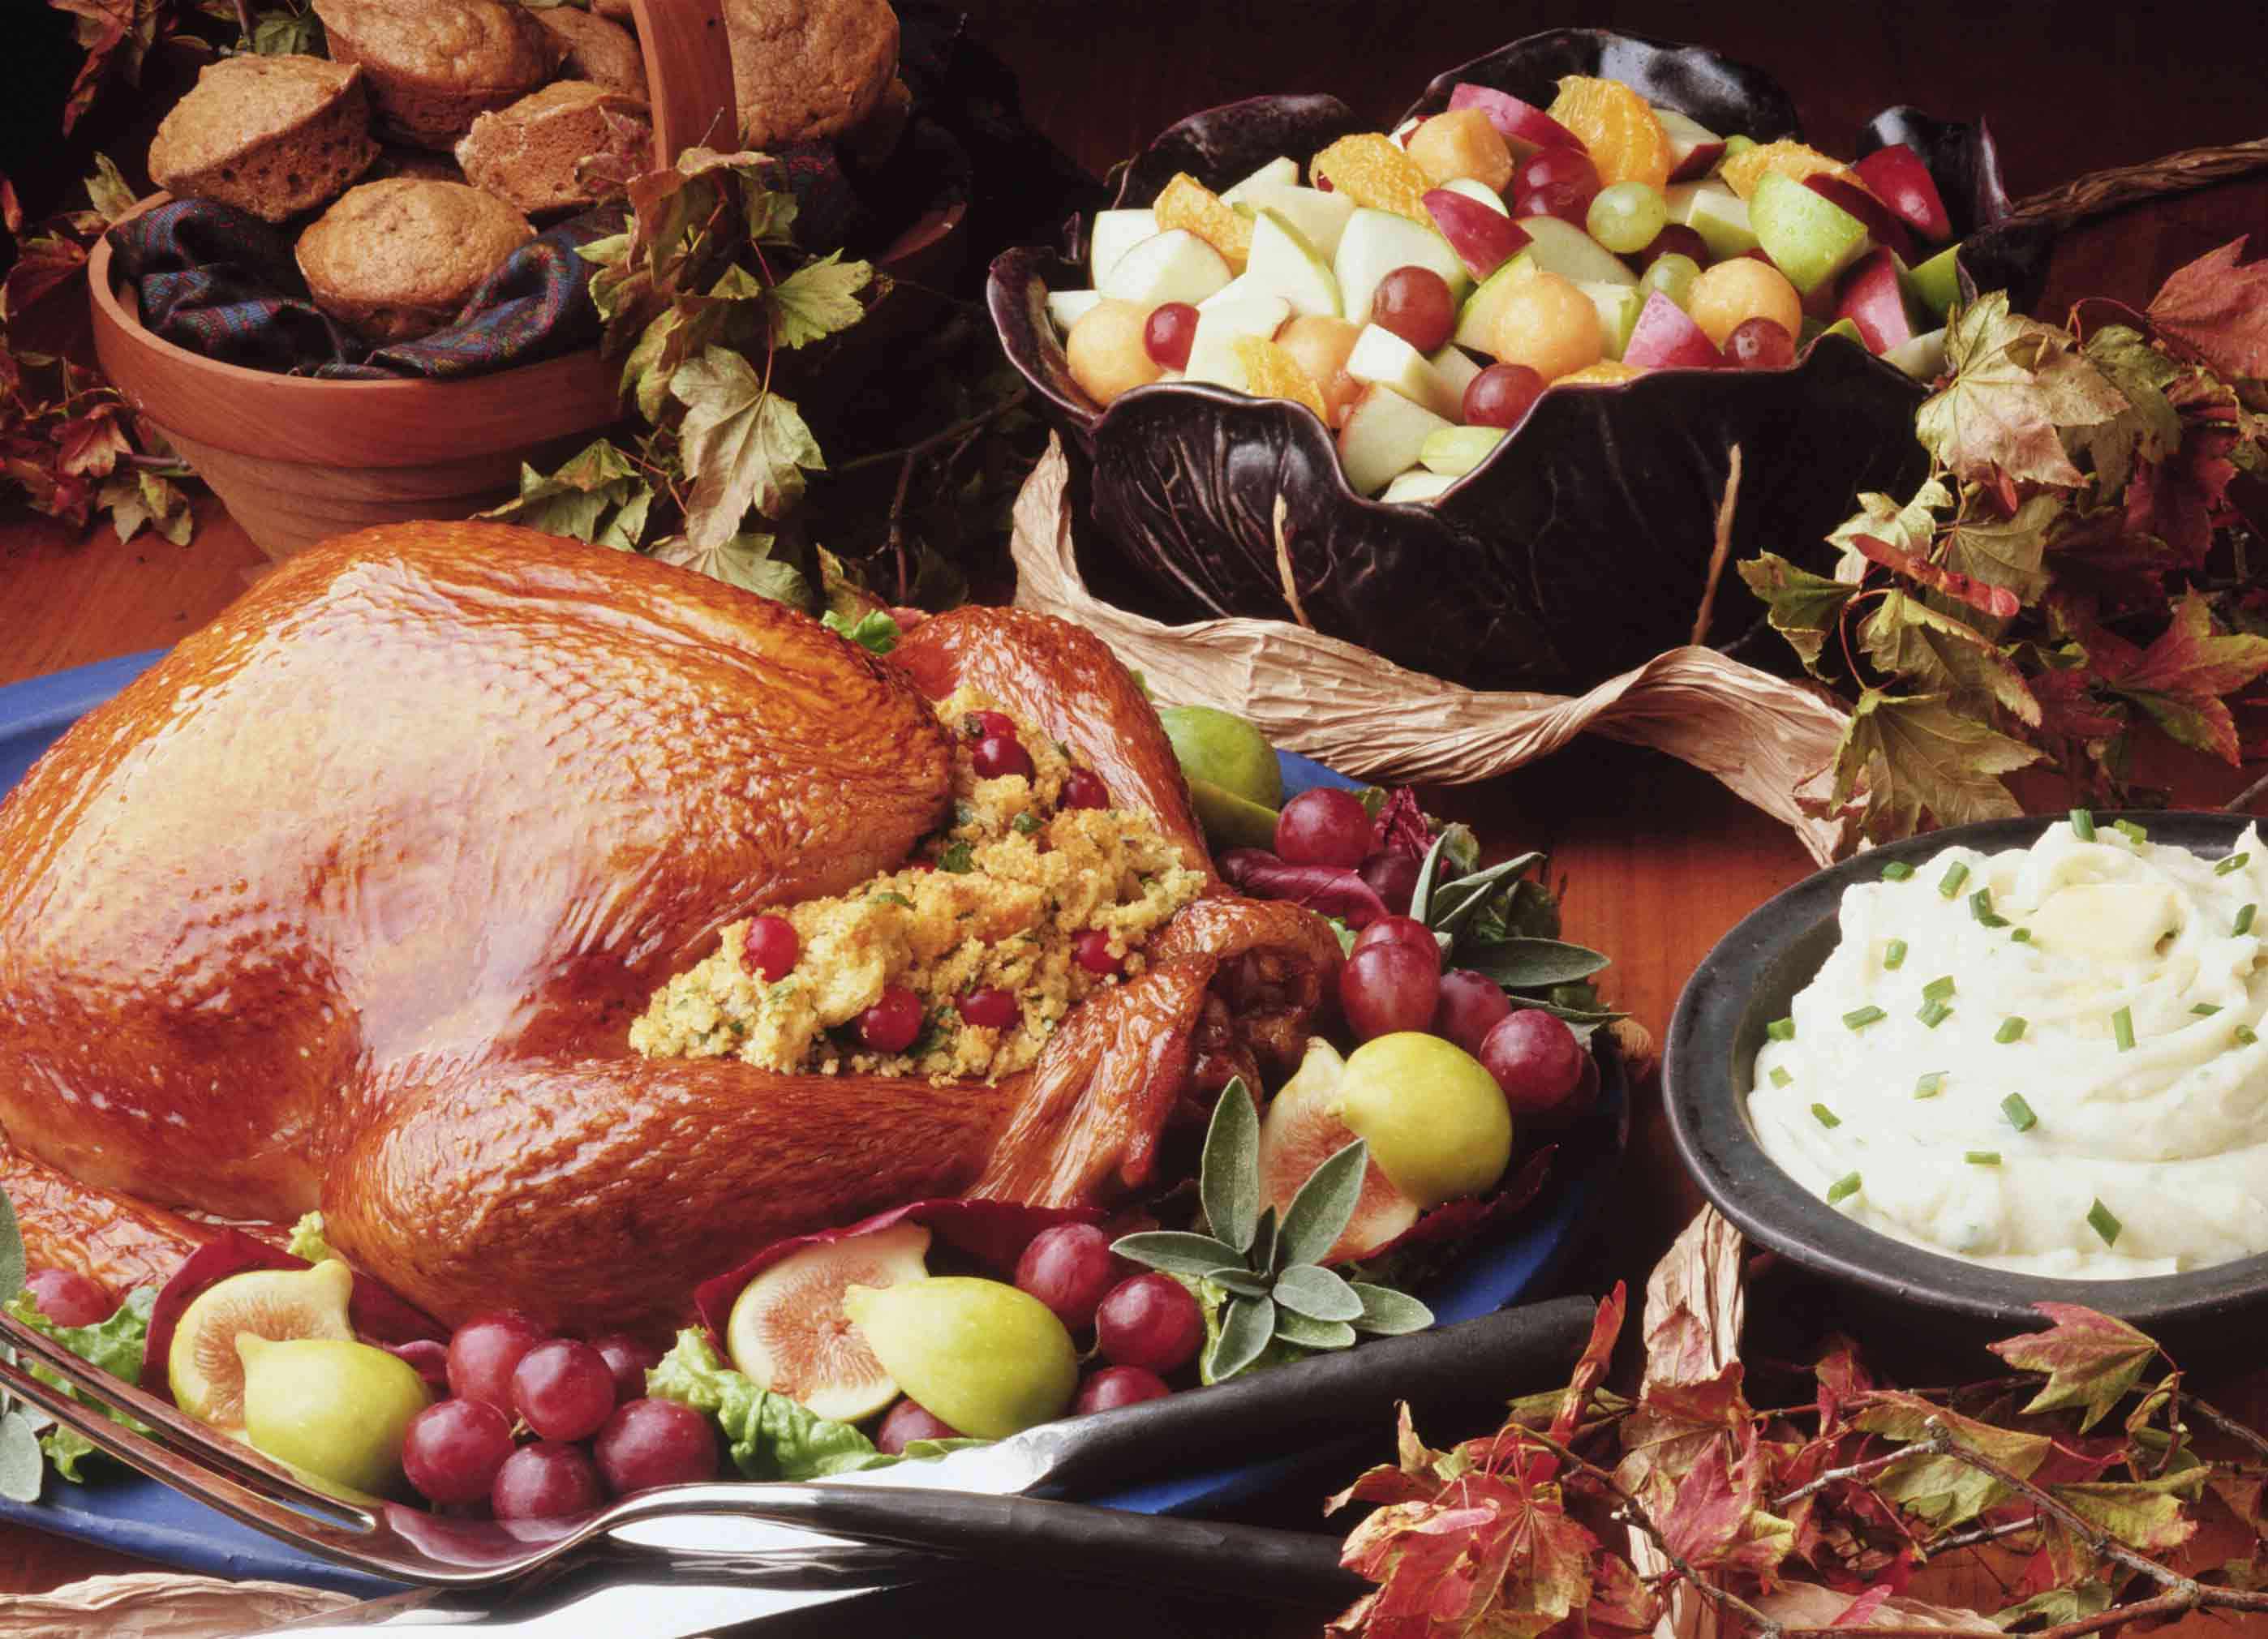 Pictures Of Thanksgiving Turkey Dinner
 Northern Michigan Restaurants Serving Thanksgiving Dinner